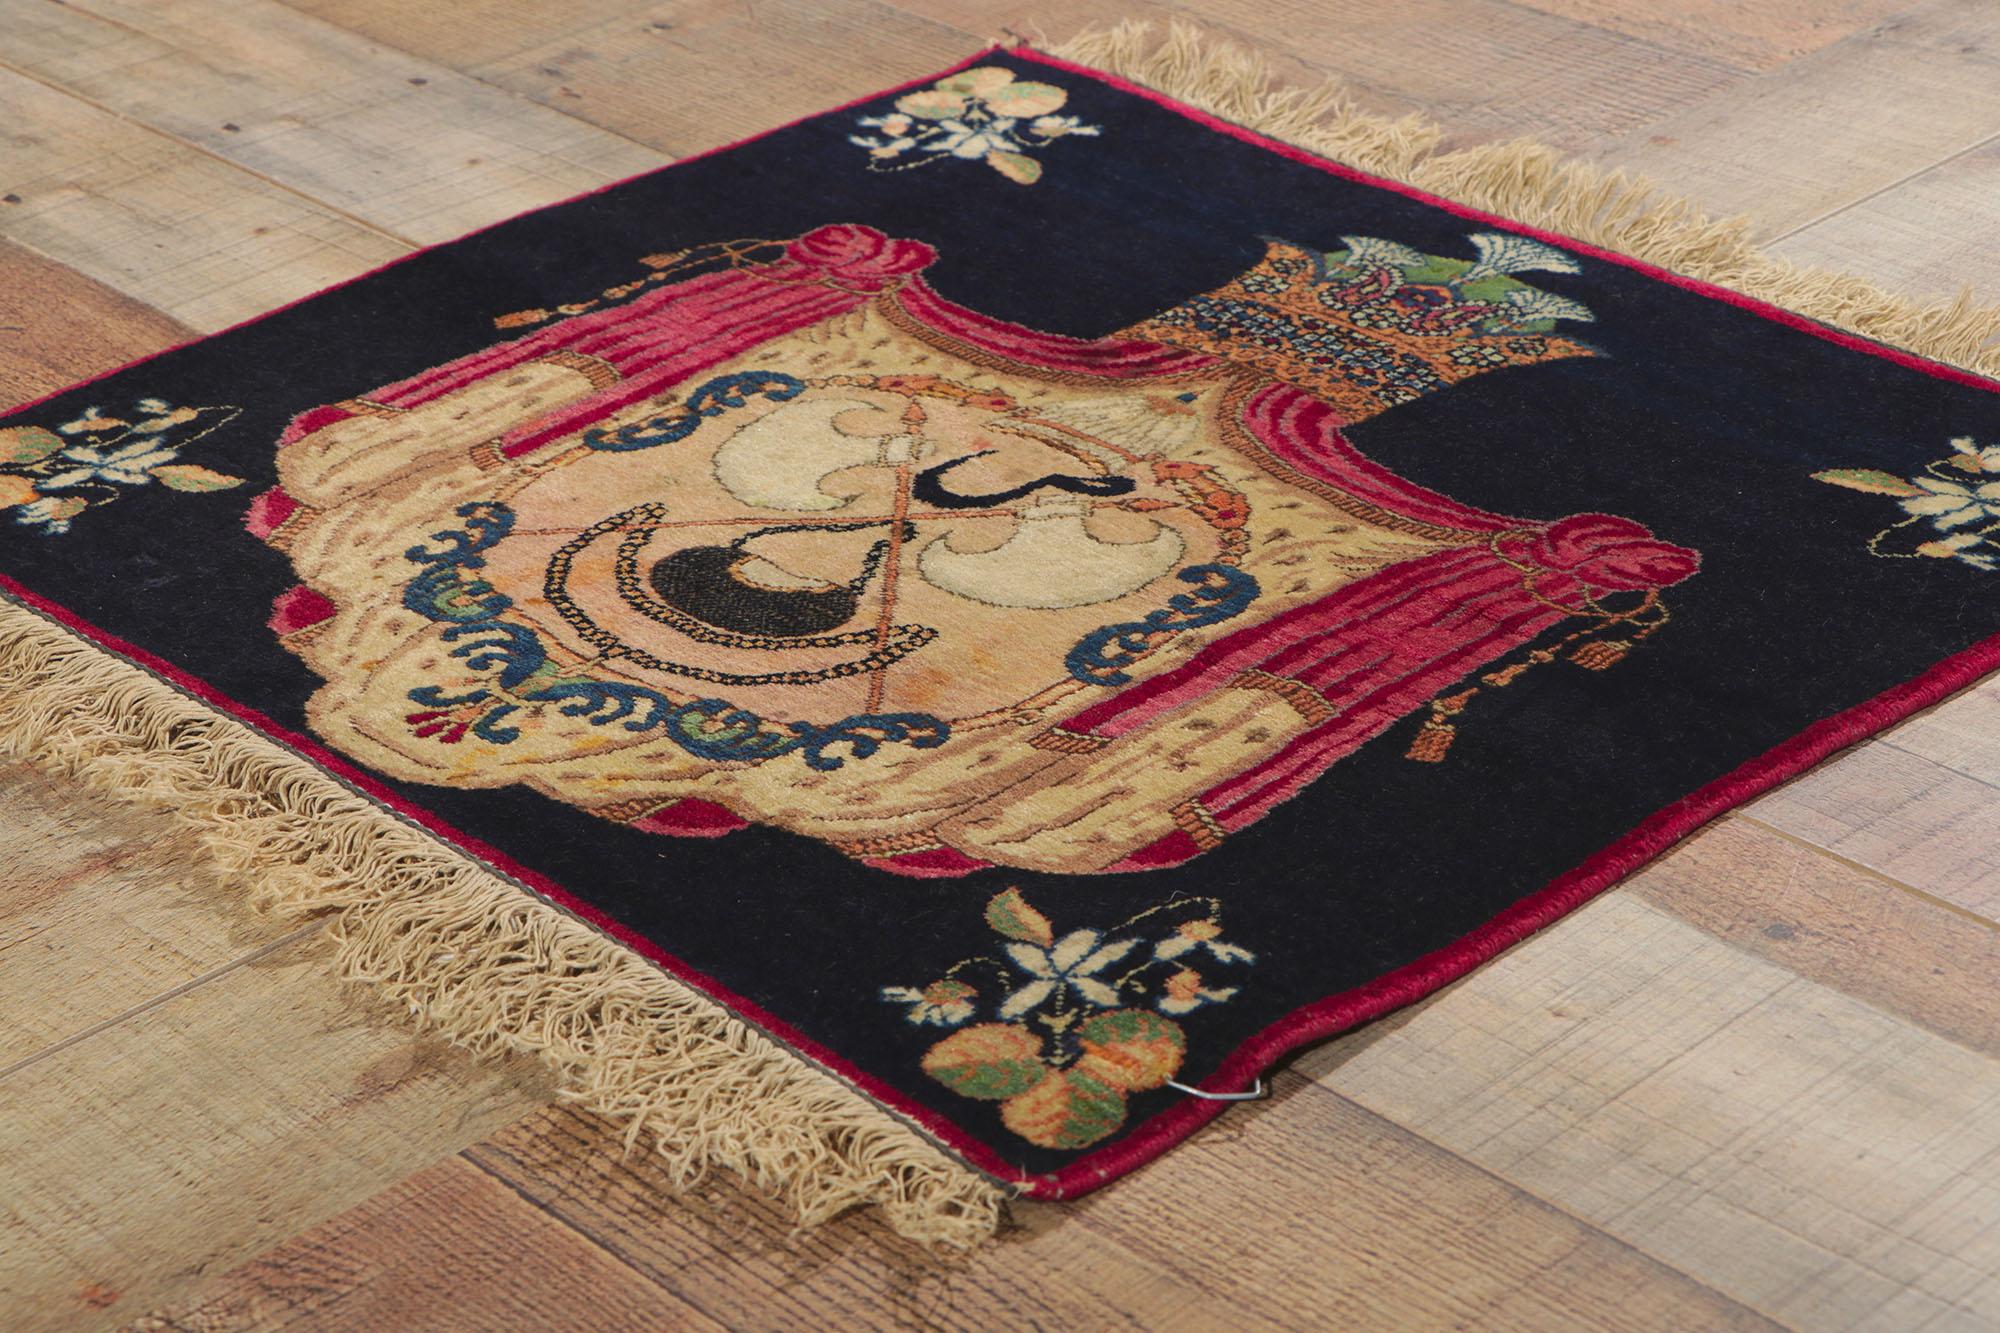 20th Century Antique Persian Kerman Carpet For Sale